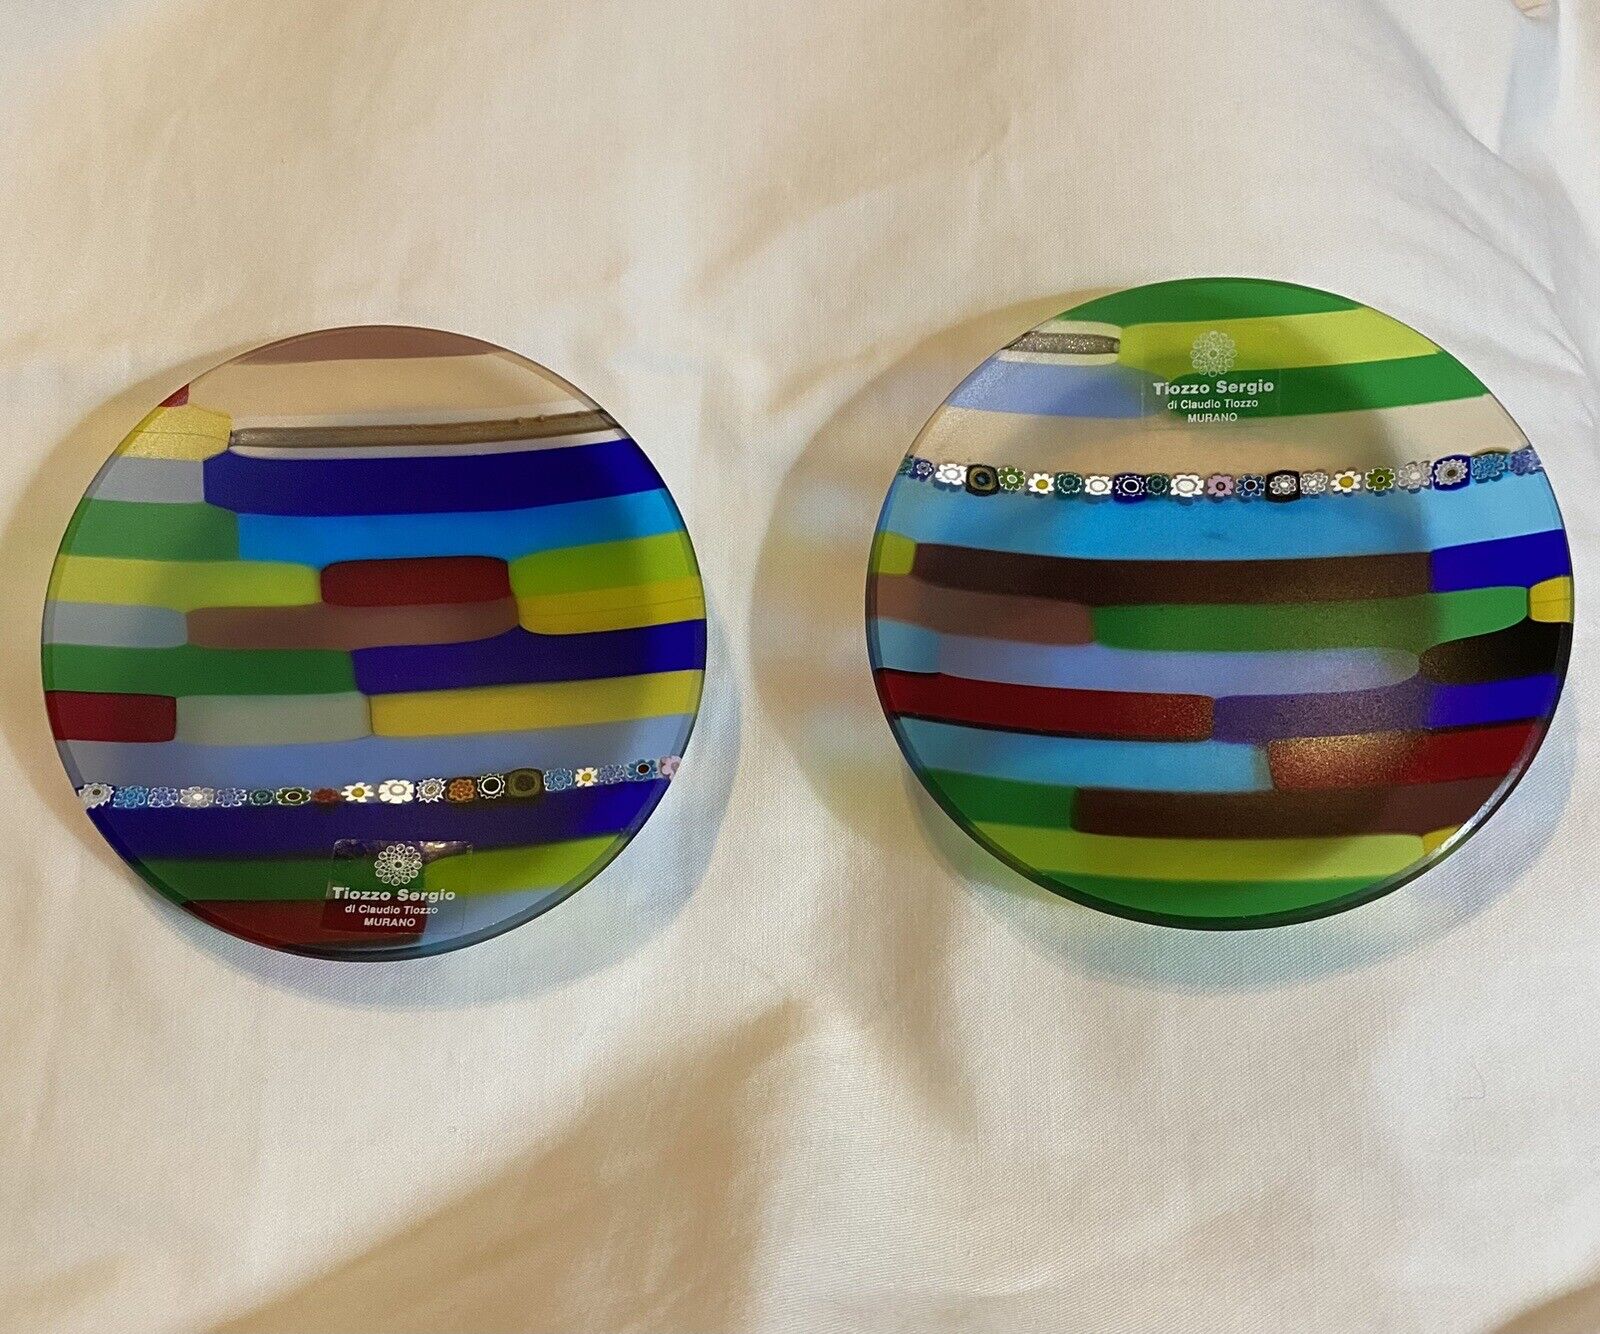 Italian Murano Glass Claudio Tiozzo Sergio Millefiori Mini Dish Bowl 4.5” Pair